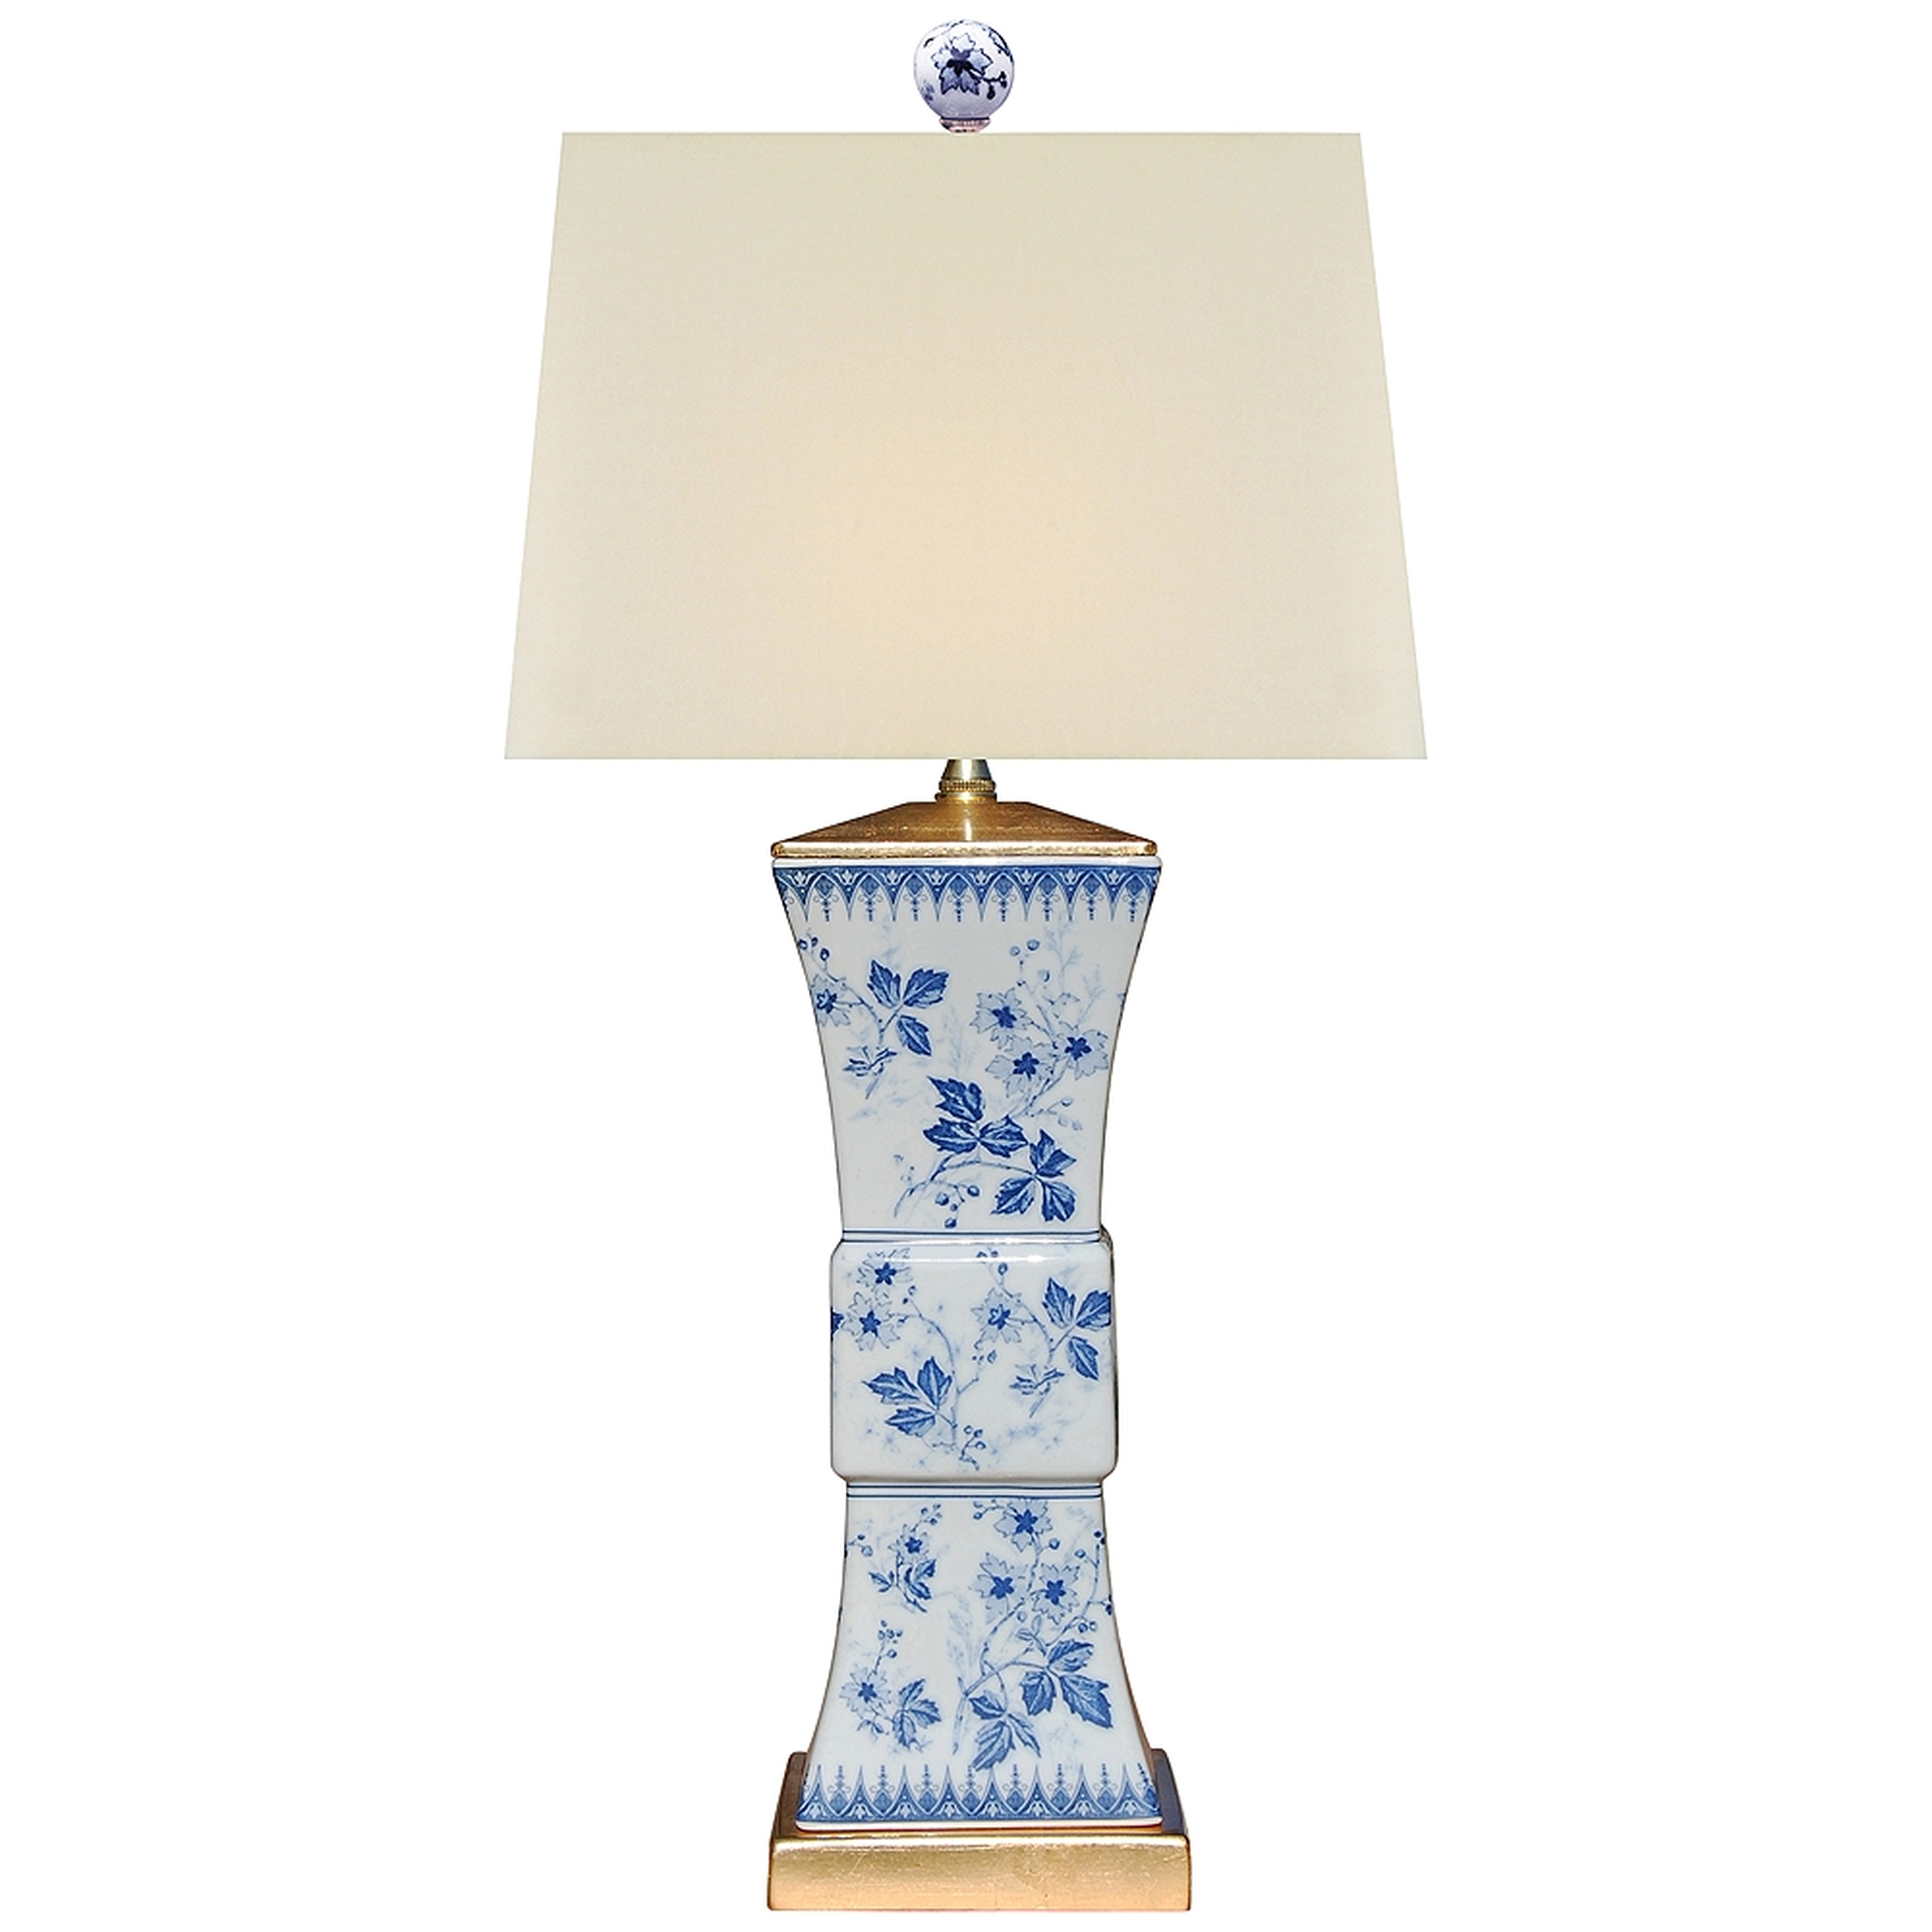 Orem Blue and White Porcelain Floral Square Vase Table Lamp - Style # 91G38 - Lamps Plus